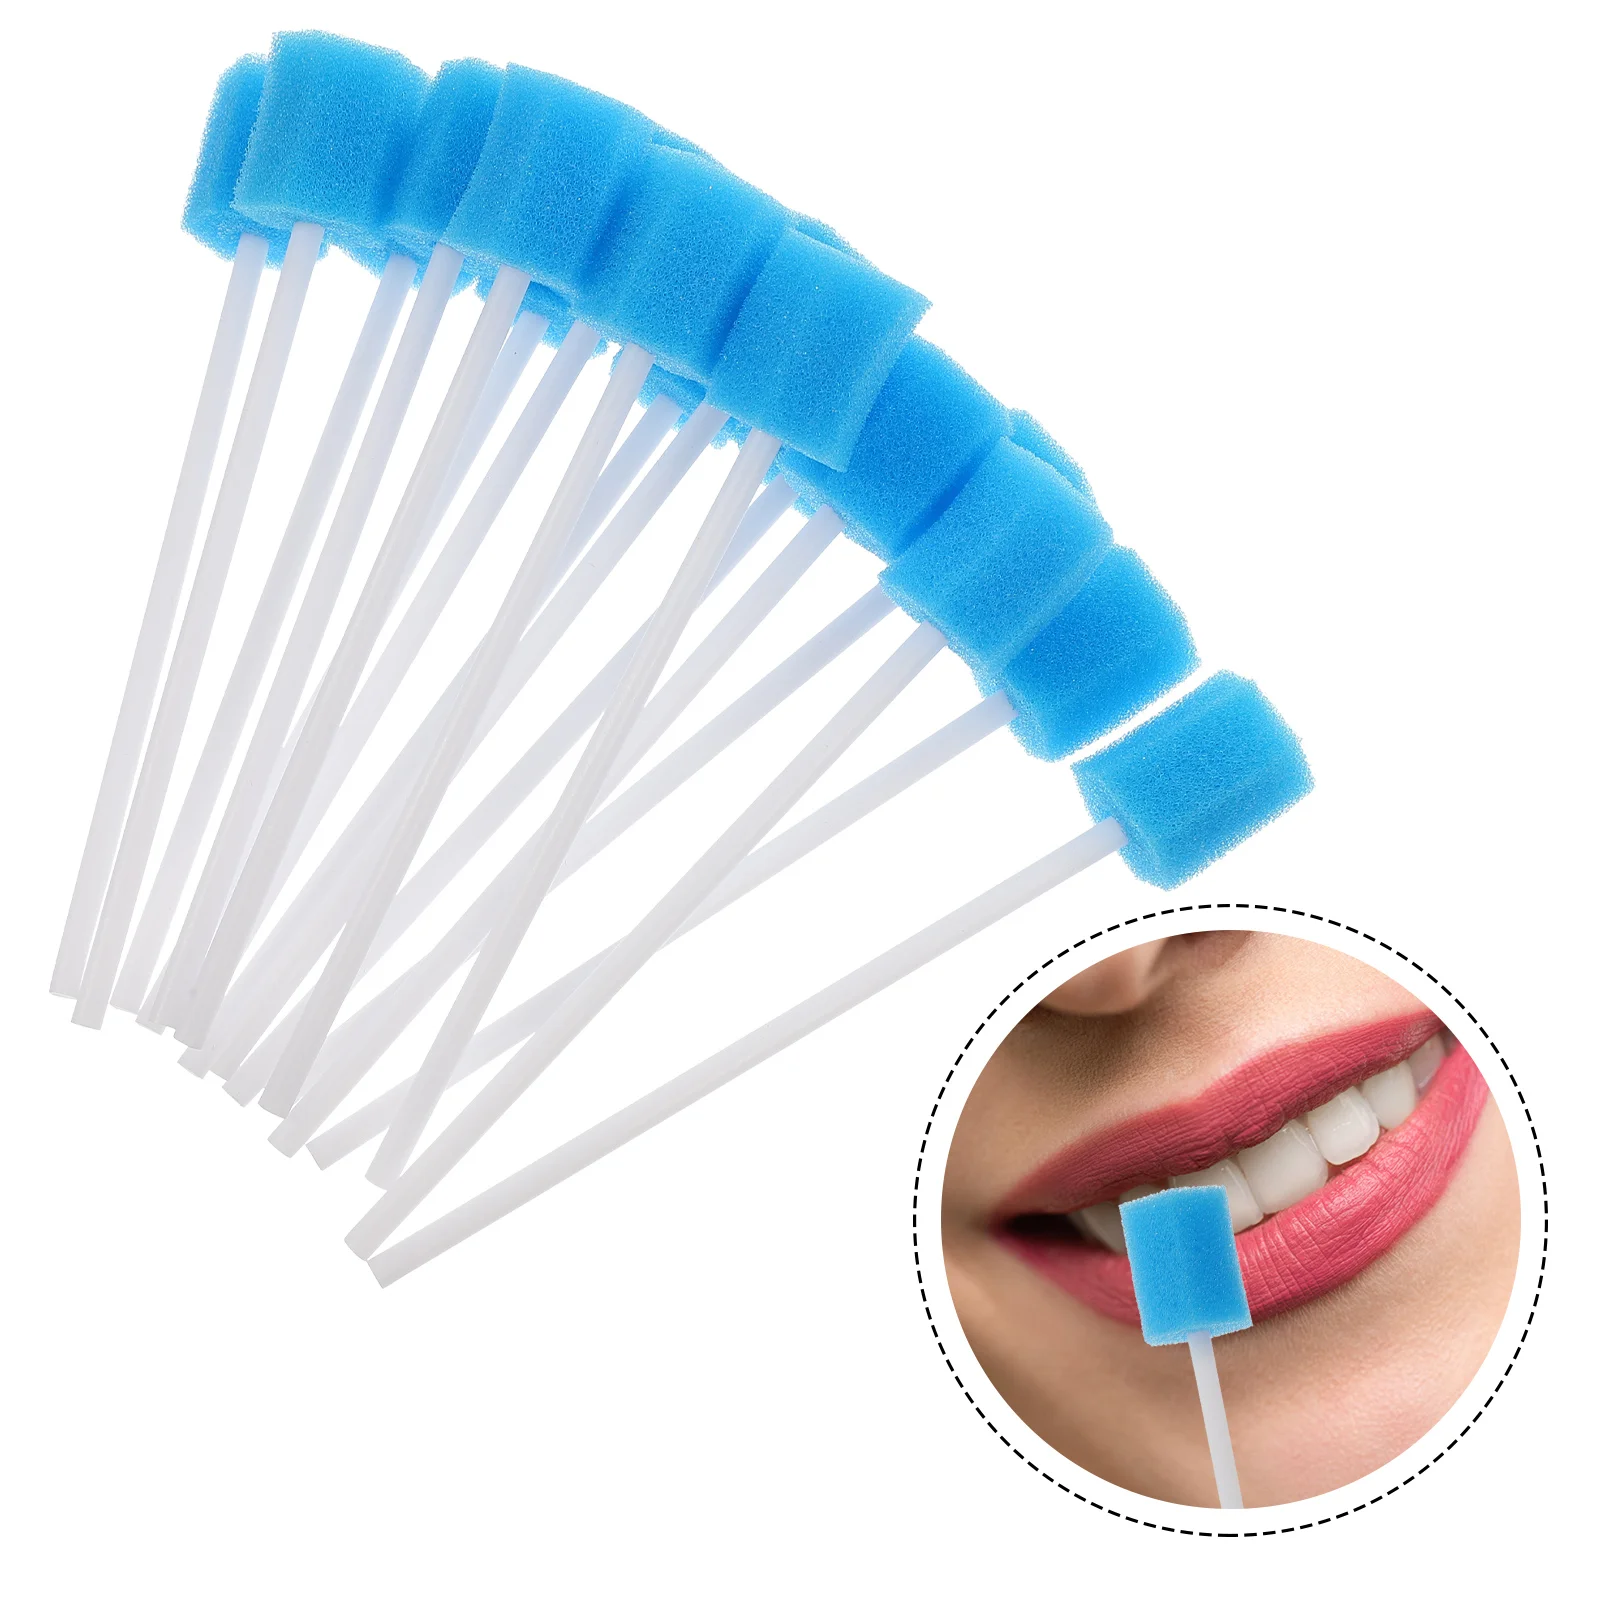 

50 Pcs Mouth Cleansing Sponge Cleaning Swabs Convenient People Oral Care Dental Accessories Sponges Stick Supplies